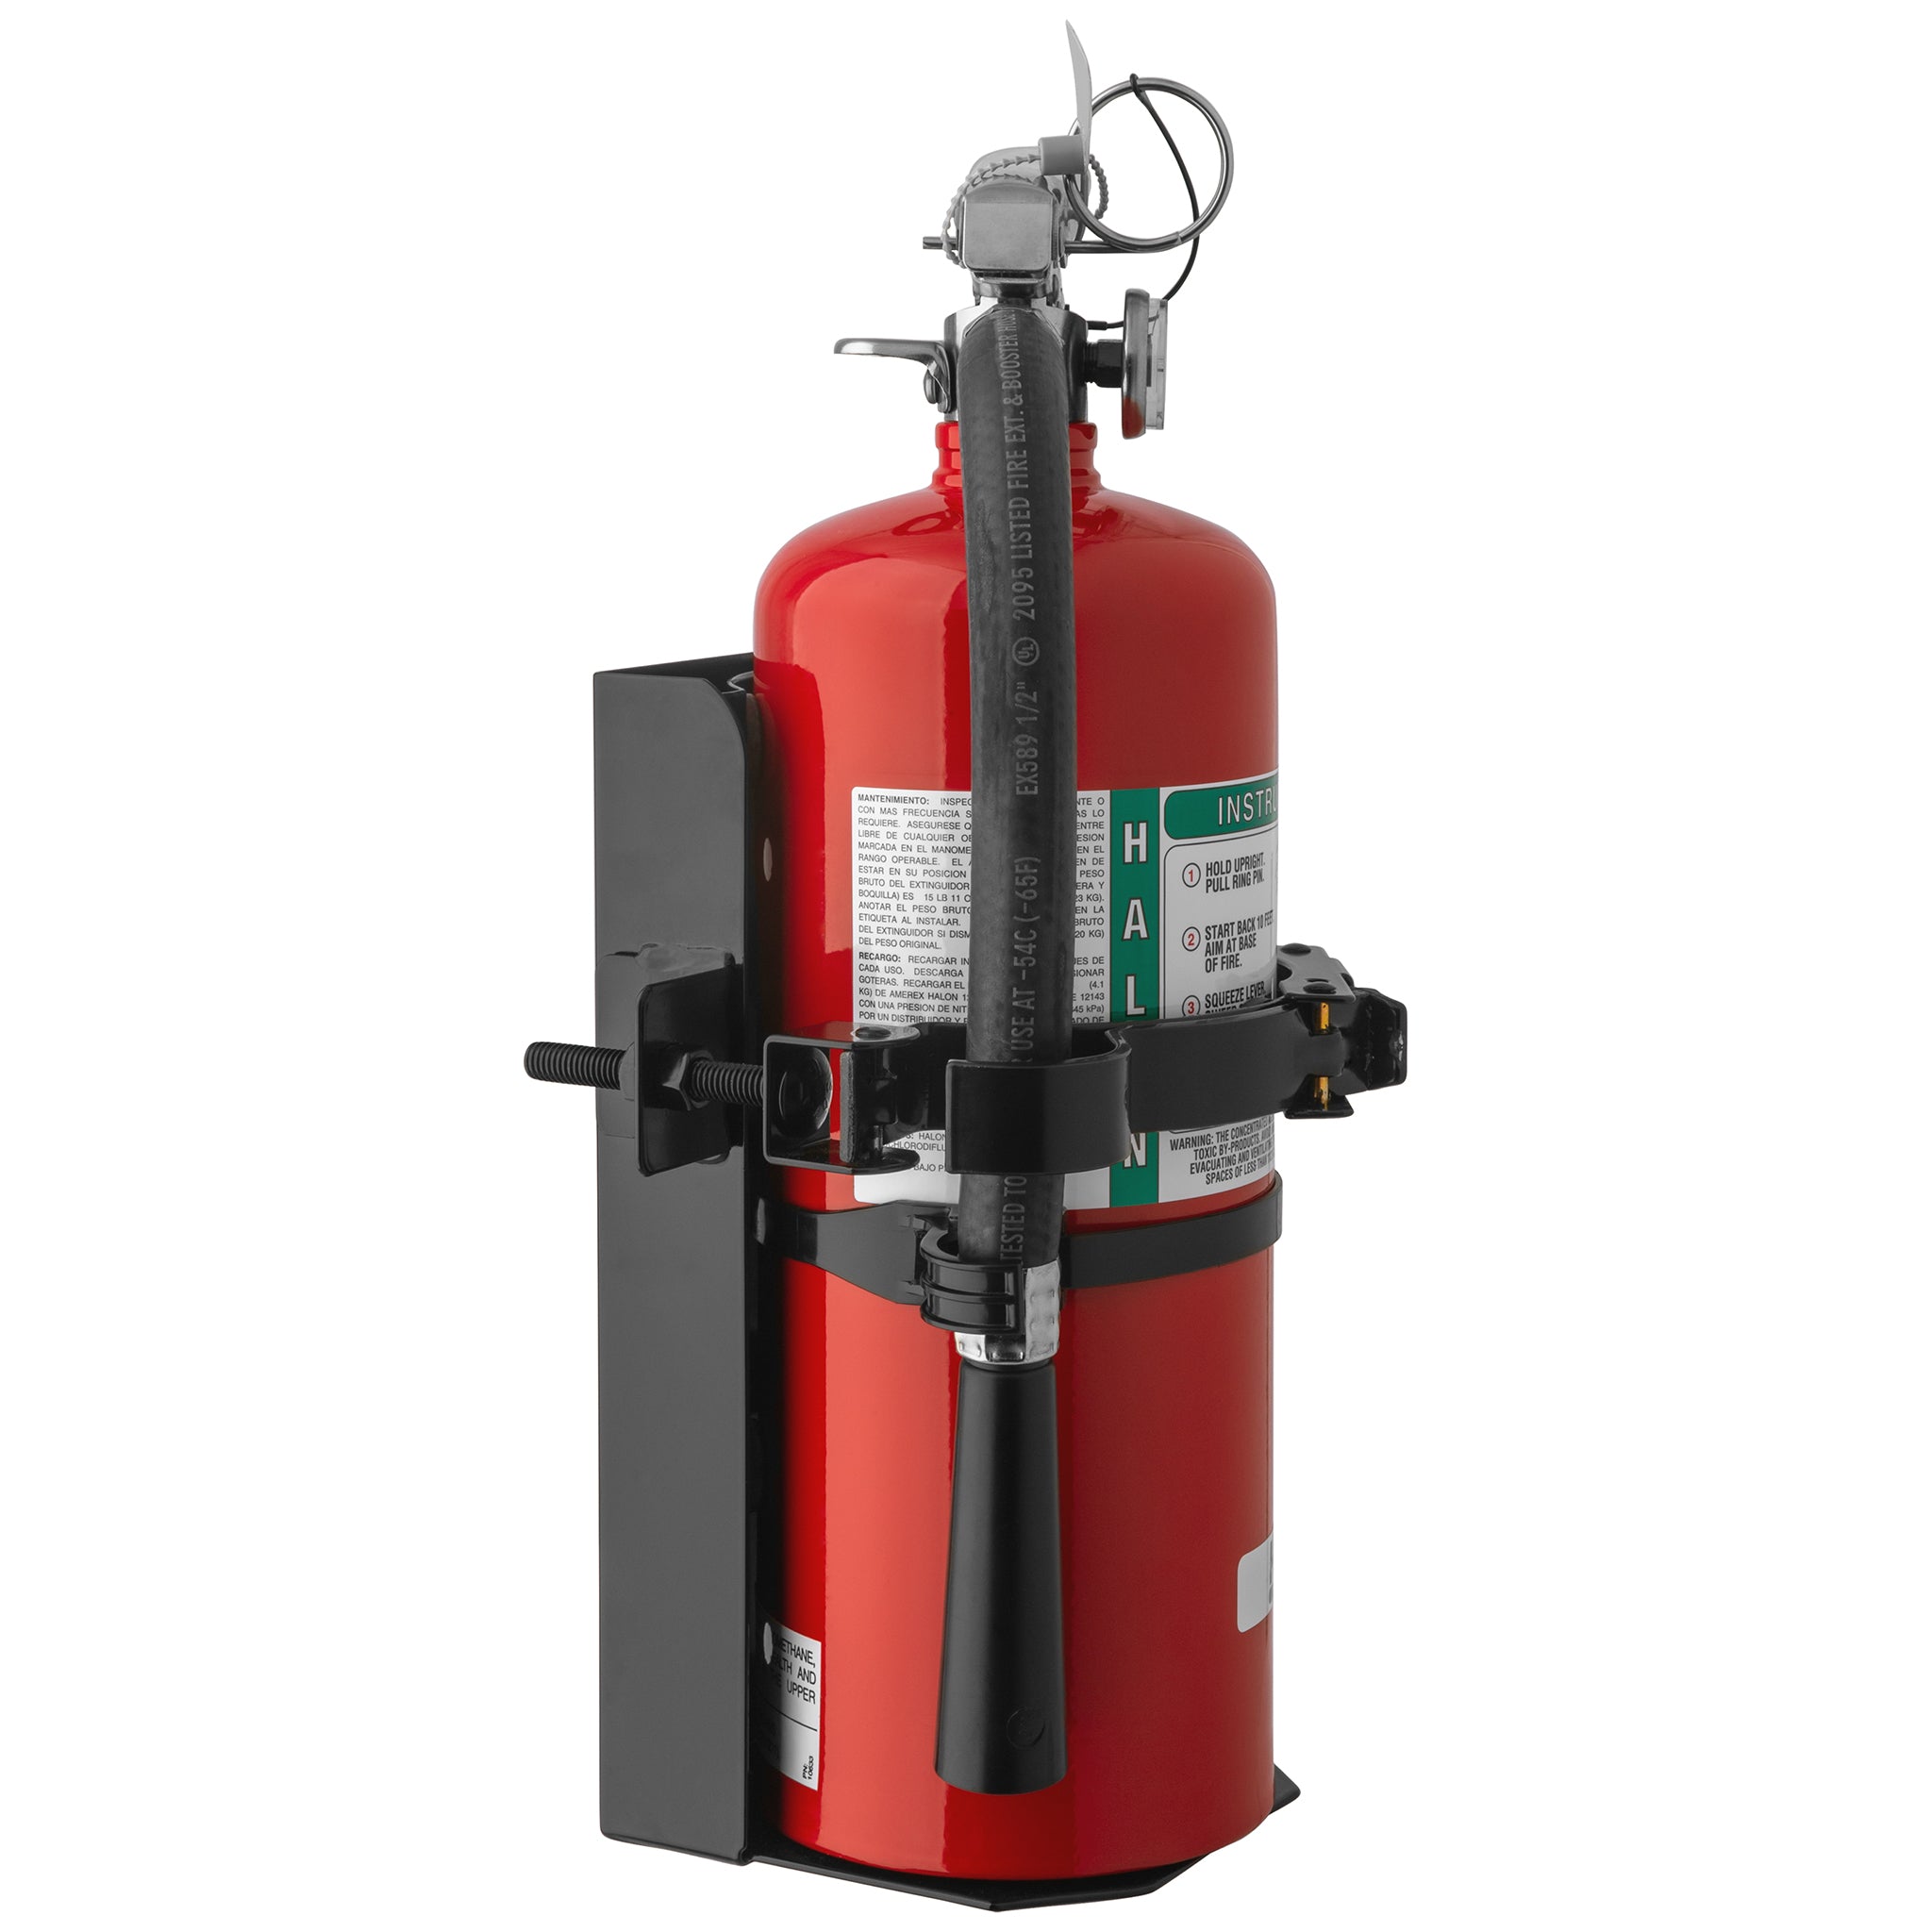 B369 - 9.0 lb. Halon Fire Extinguisher